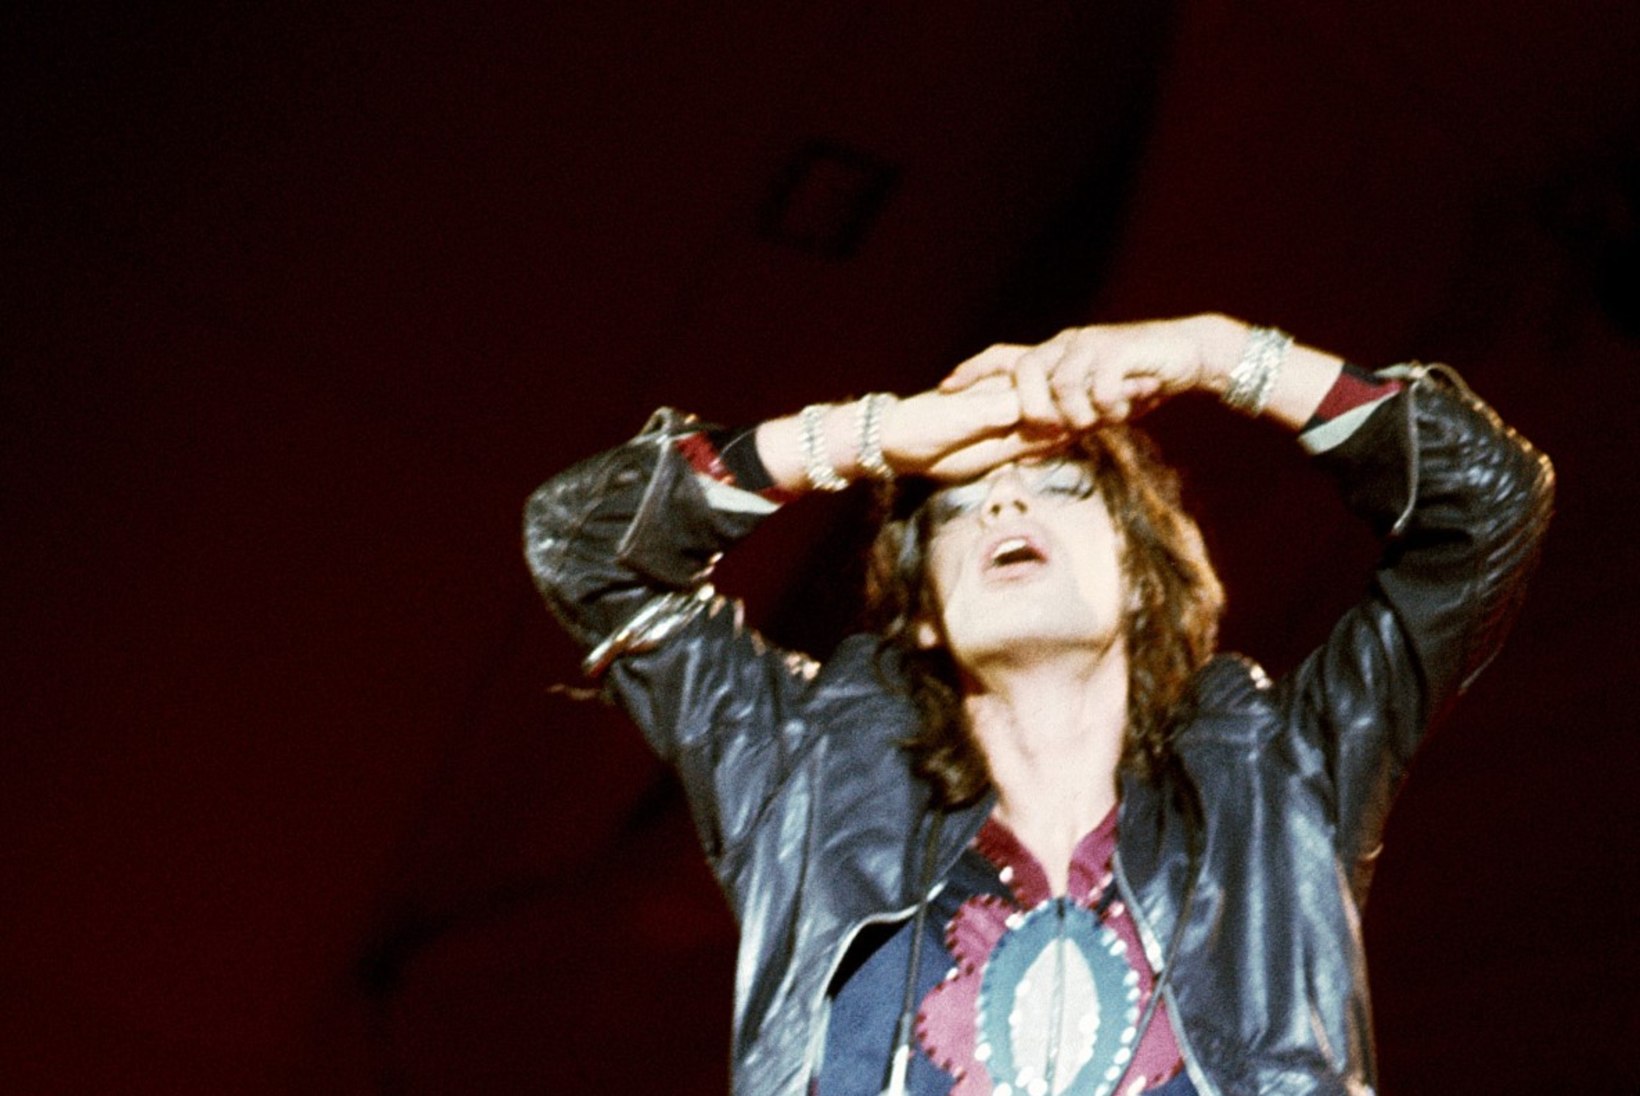 Mick Jagger ostis LSD mõju all olles lossi